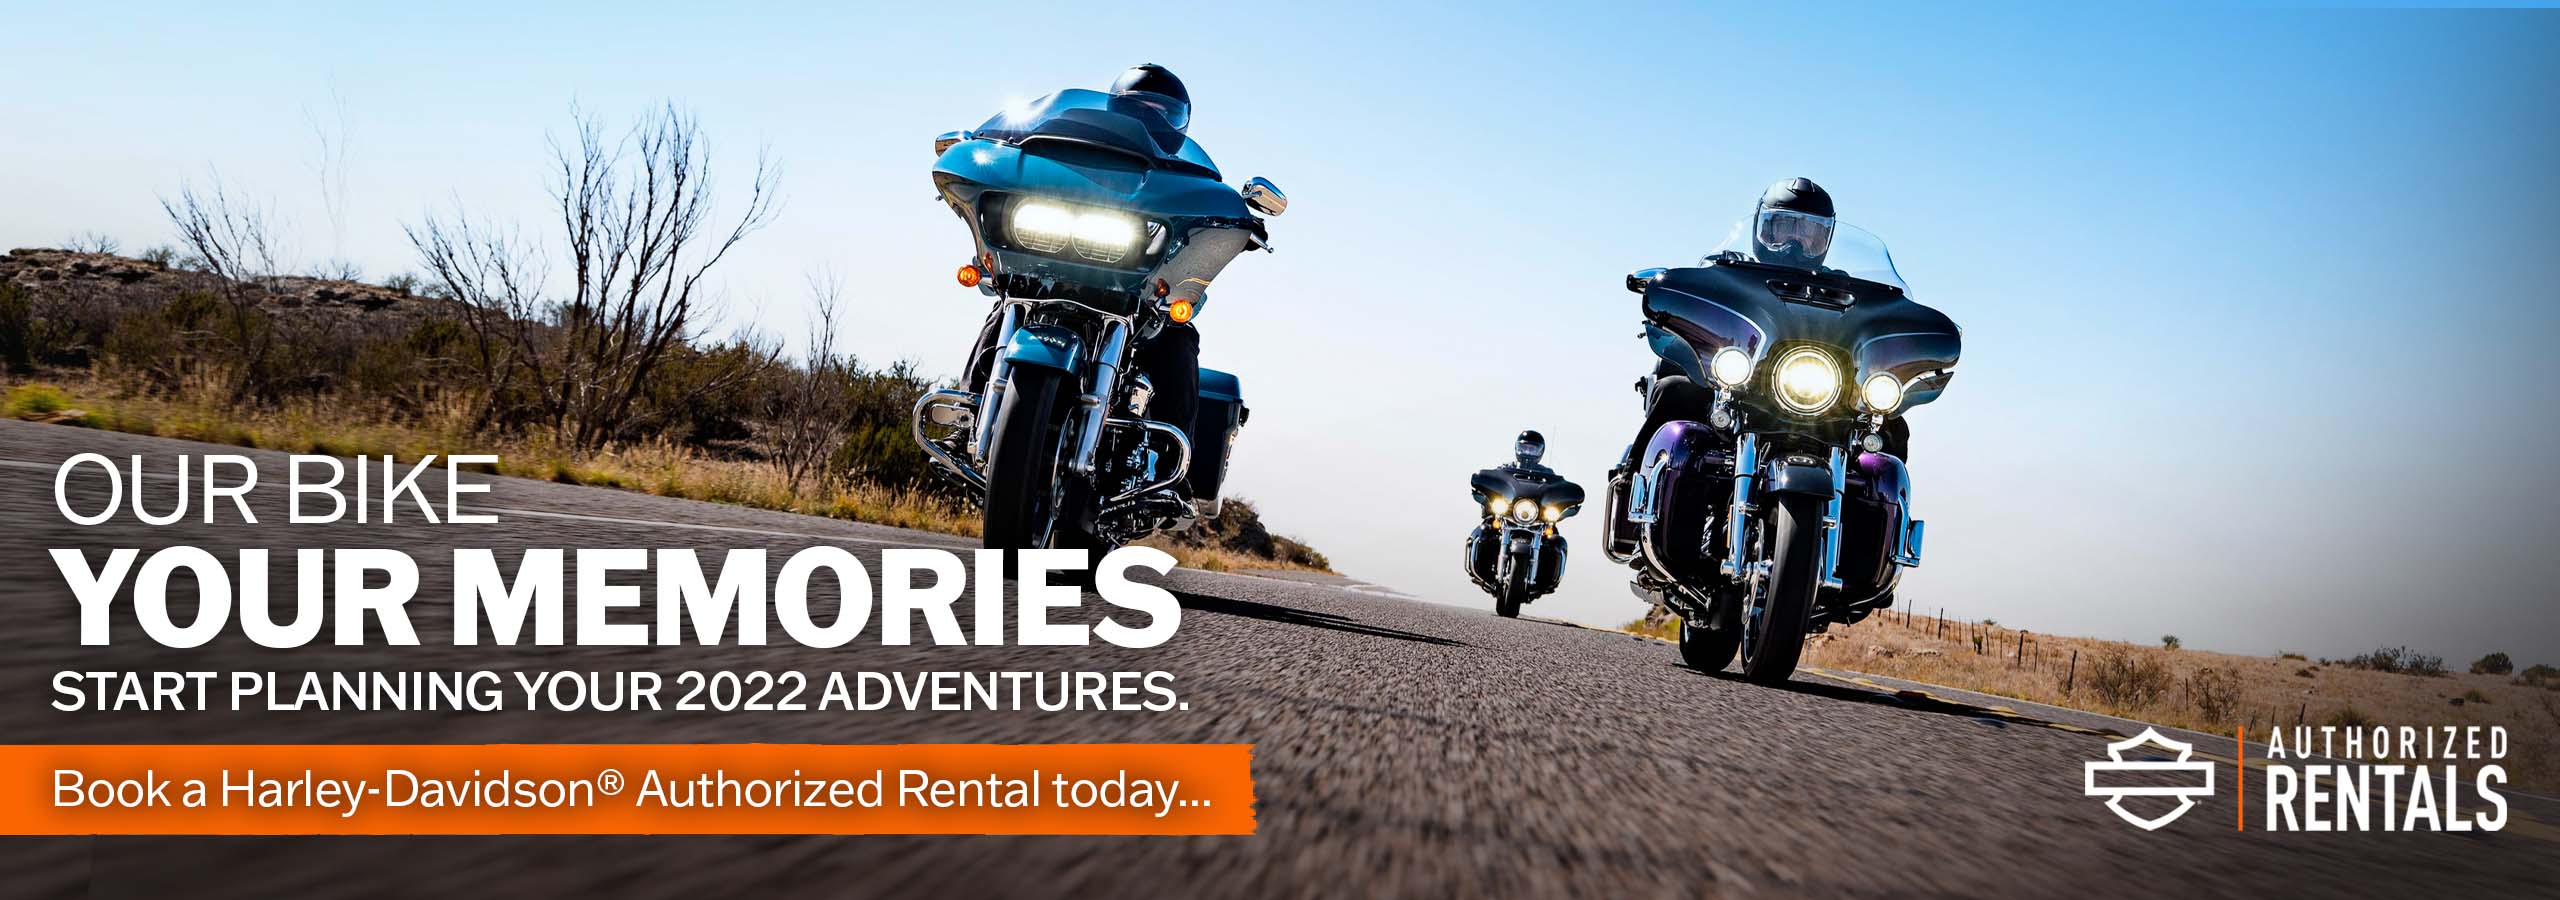 Harley Davidson authorised rentals road trip